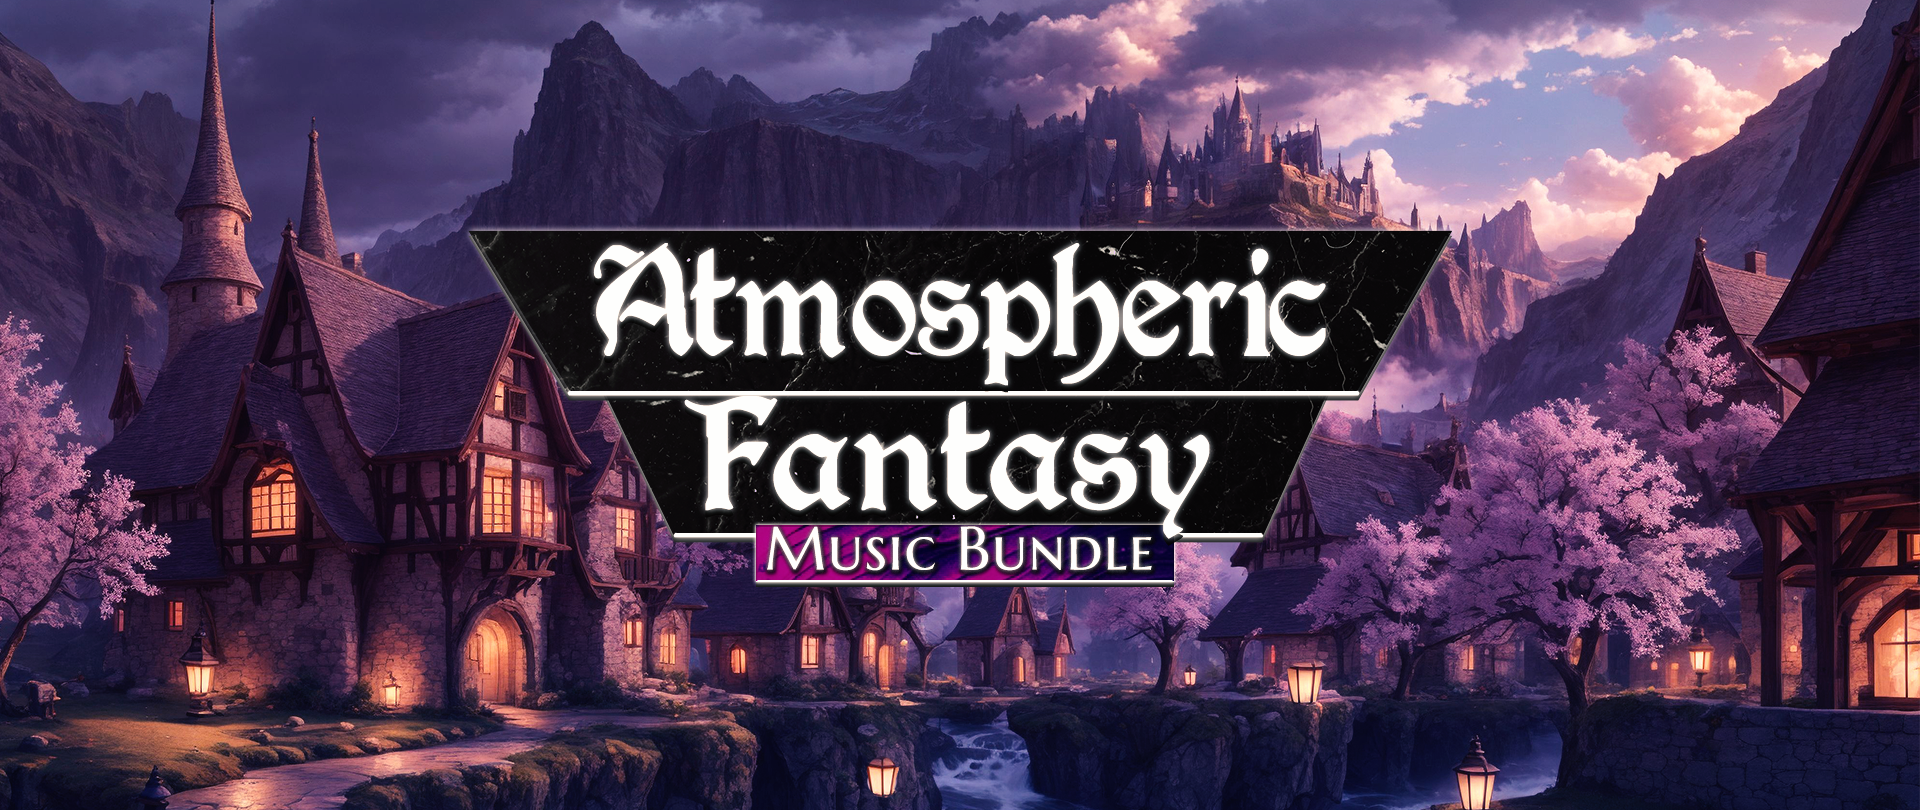 Atmospheric Fantasy Music Bundle